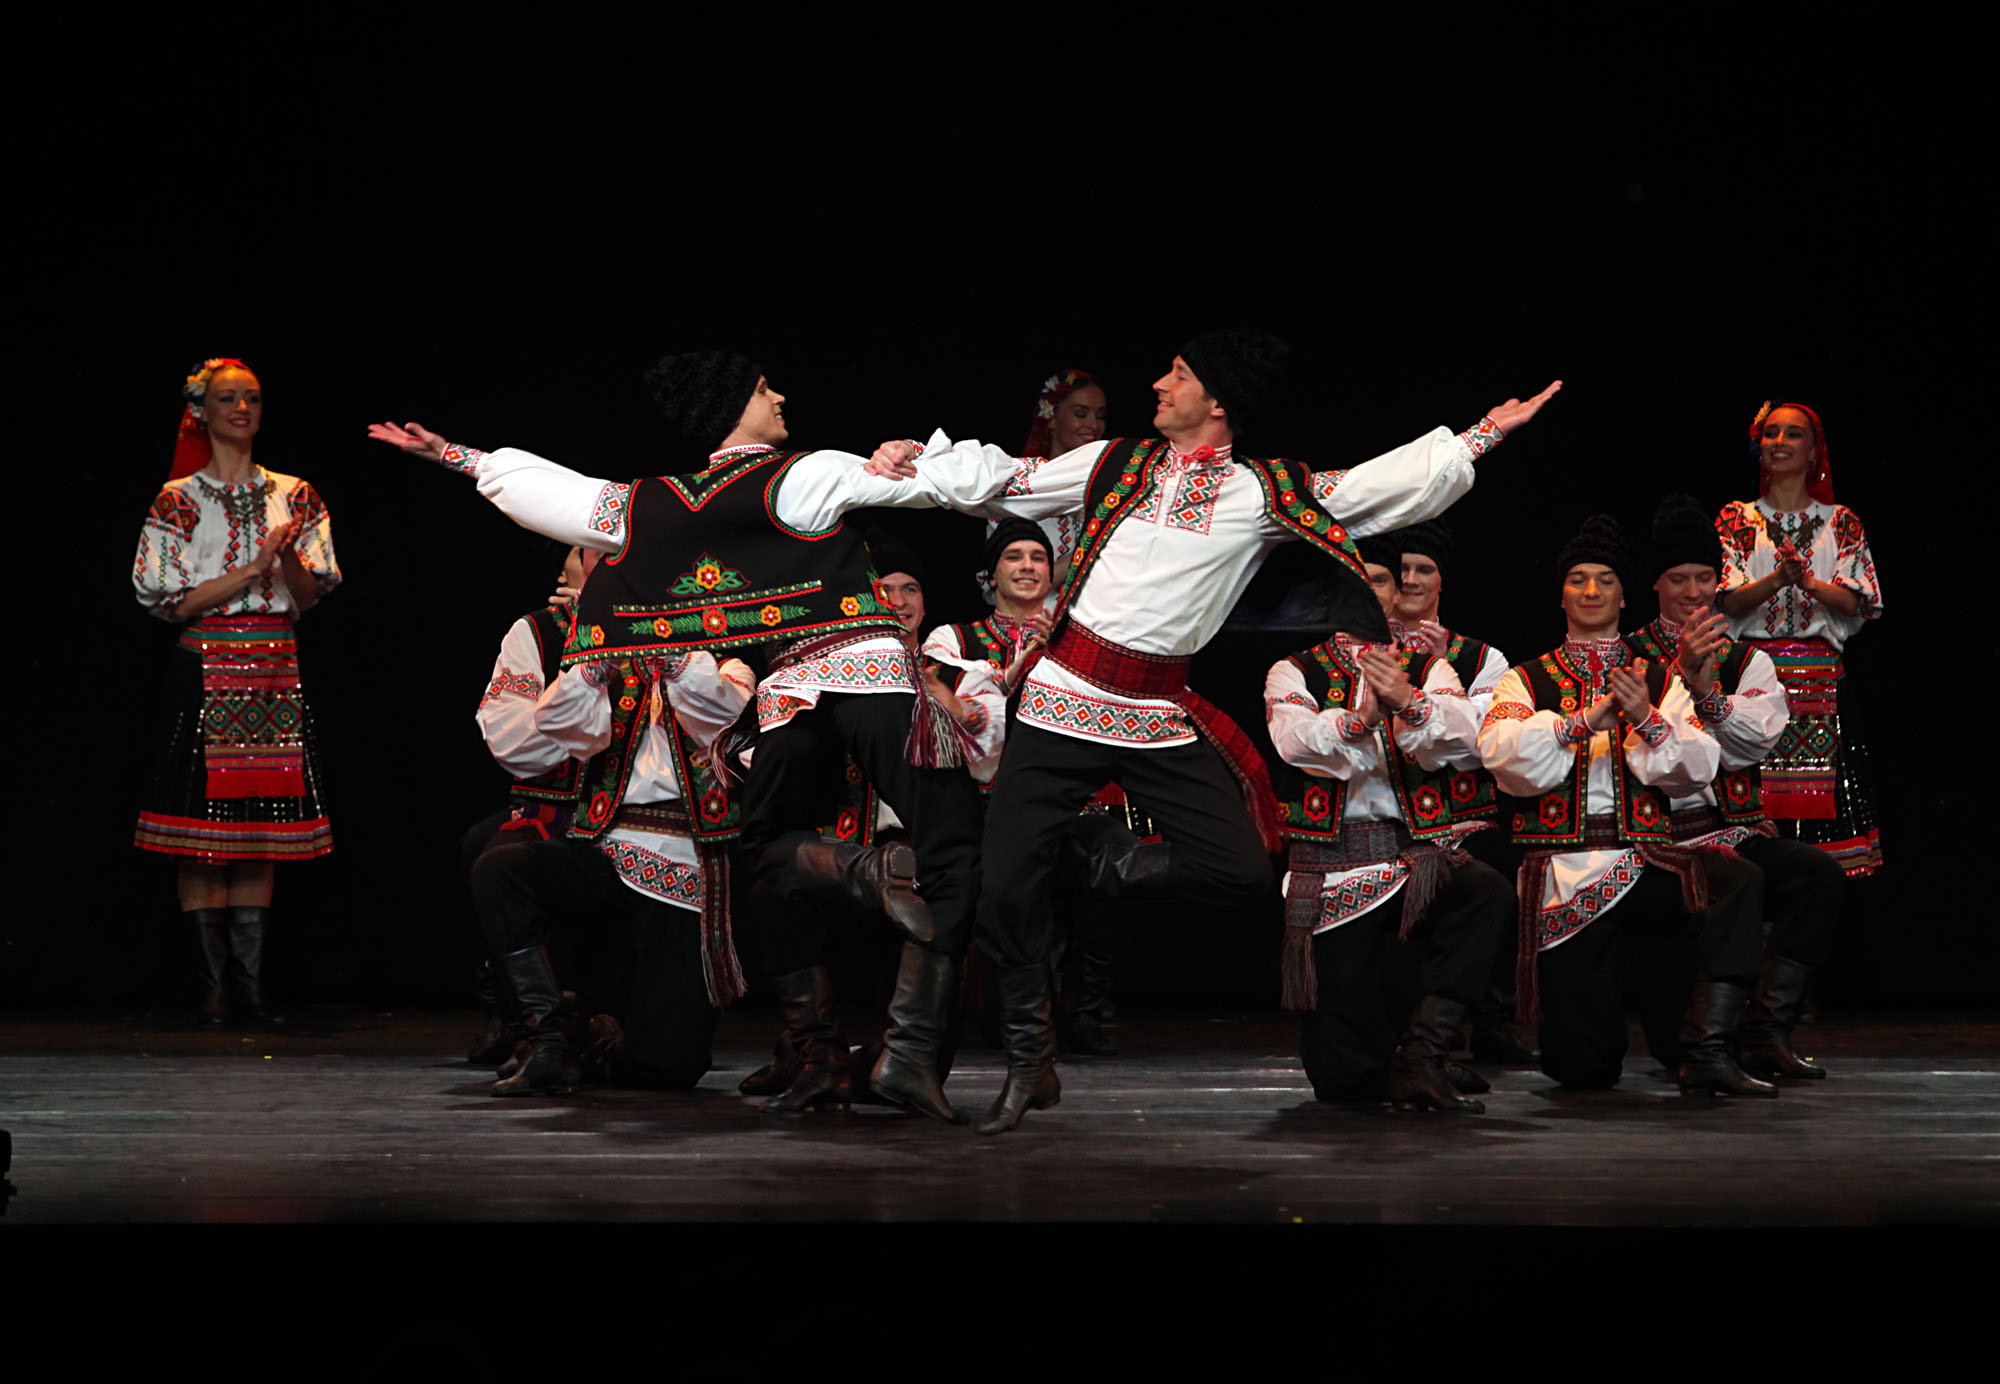 Pada akhir penampilan, Igor Moiseyev Ballet memberikan kejutan pada para penonton dengan menampilkan salah satu tradisional Indonesia — Tari Saman. Kejutan ini sontak disambut tepuk tangan meriah dari para penonton